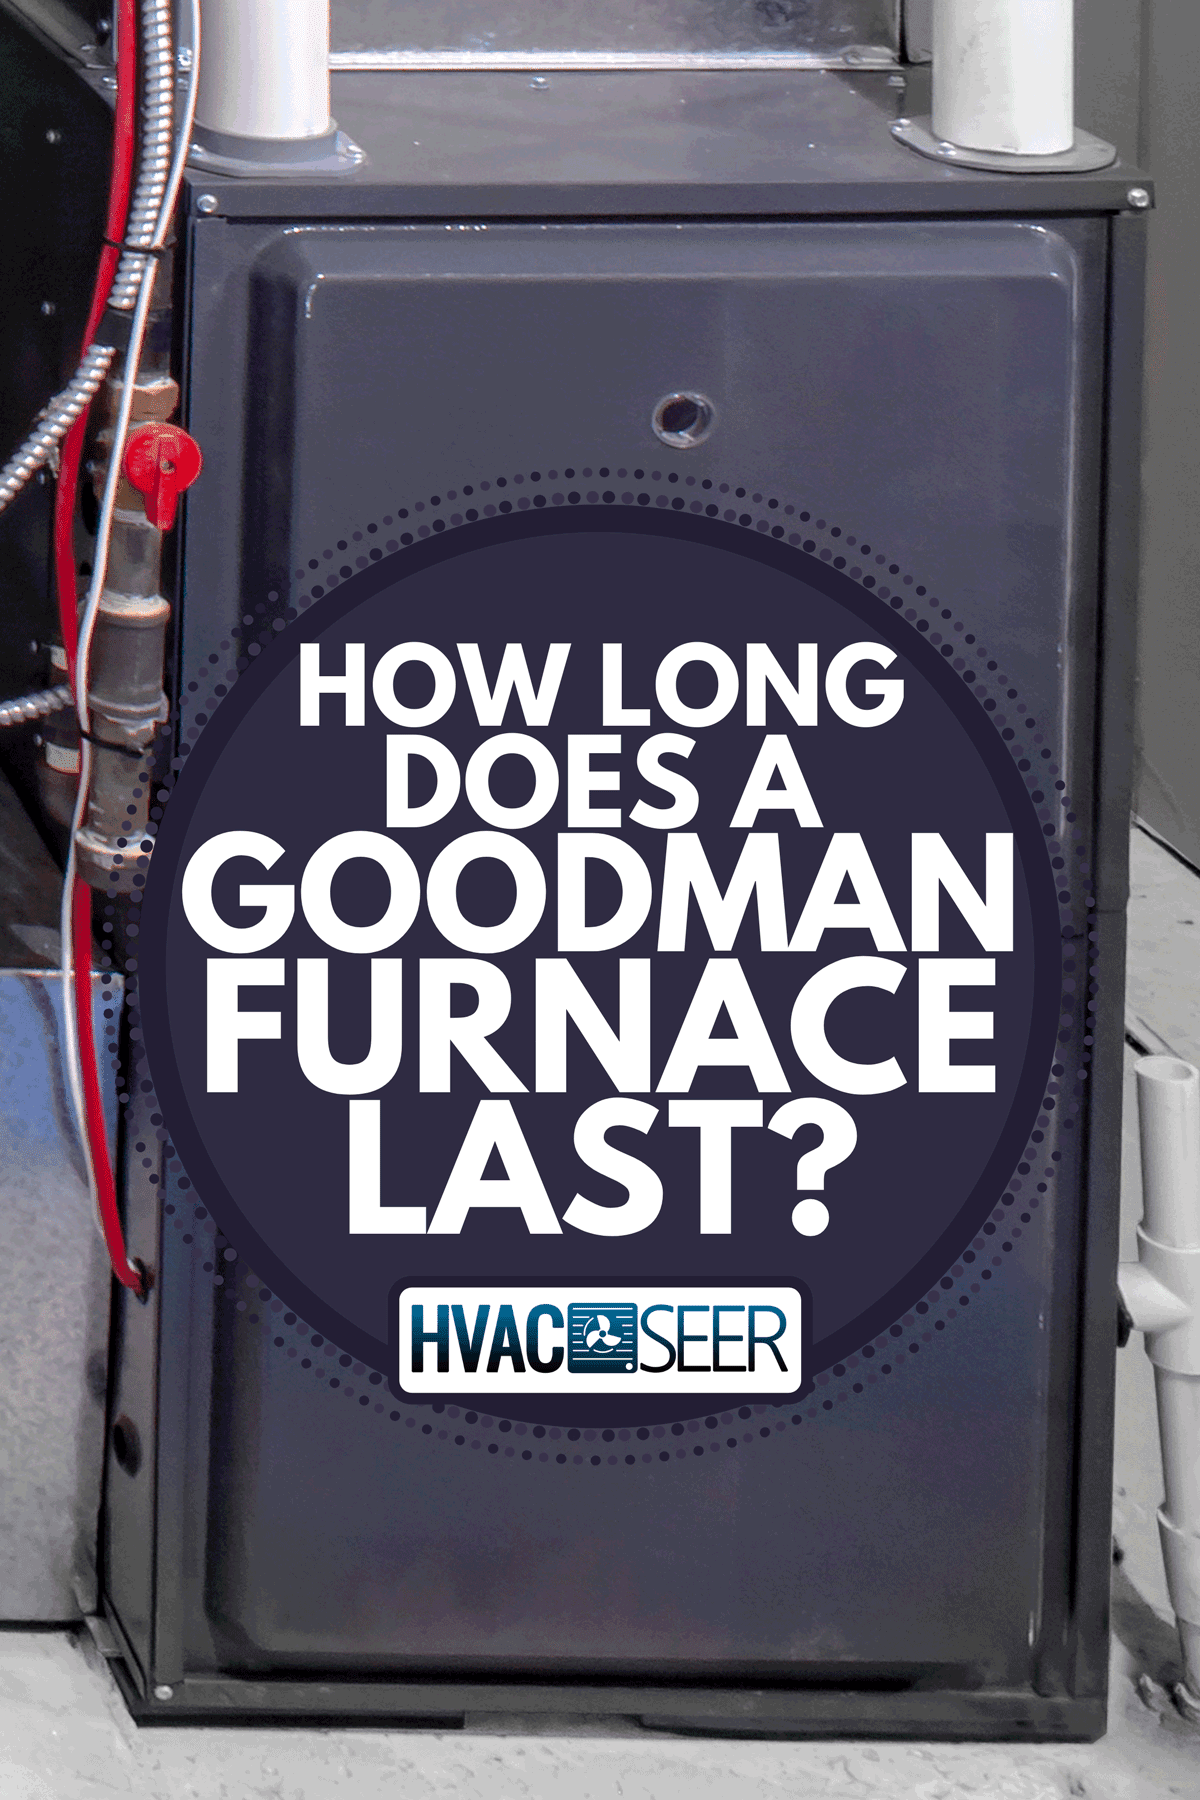 A home high efficiency furnace, How Long Does A Goodman Furnace Last?